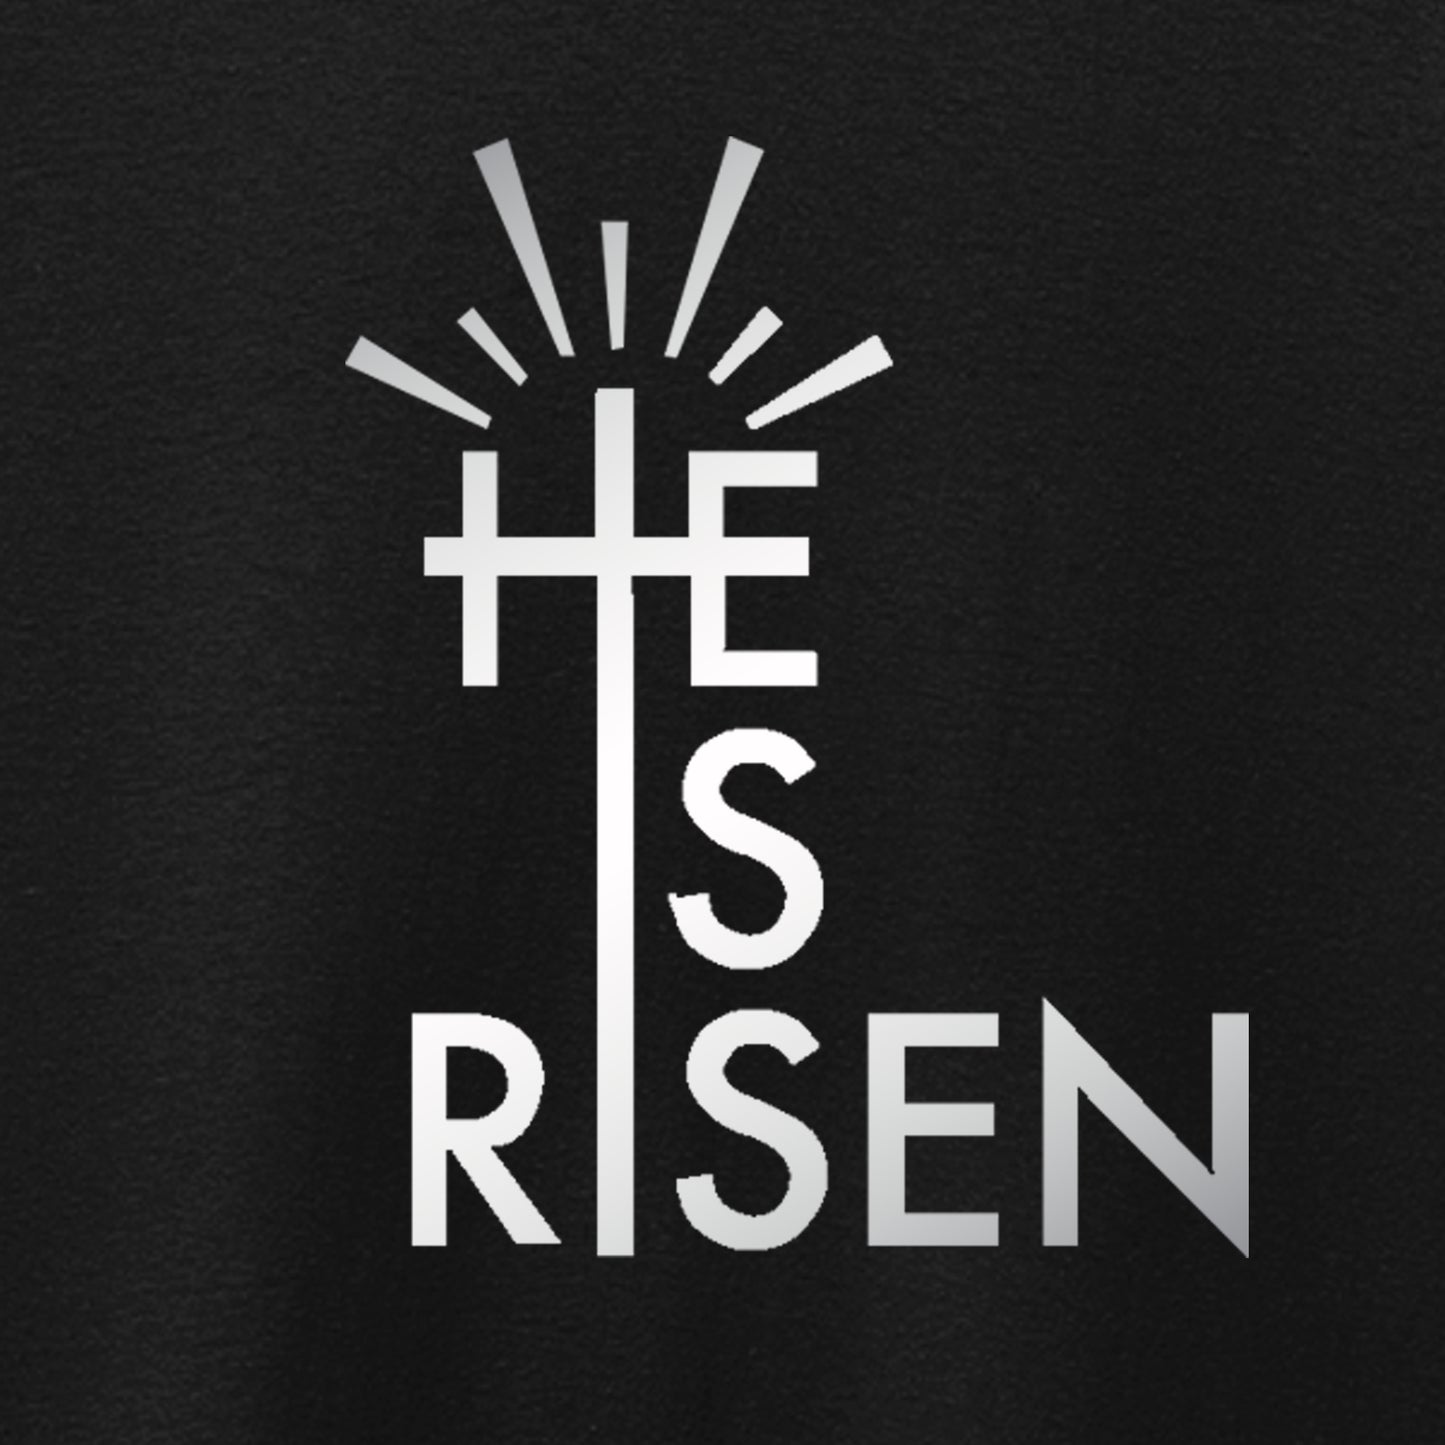 He is Risen T shirt